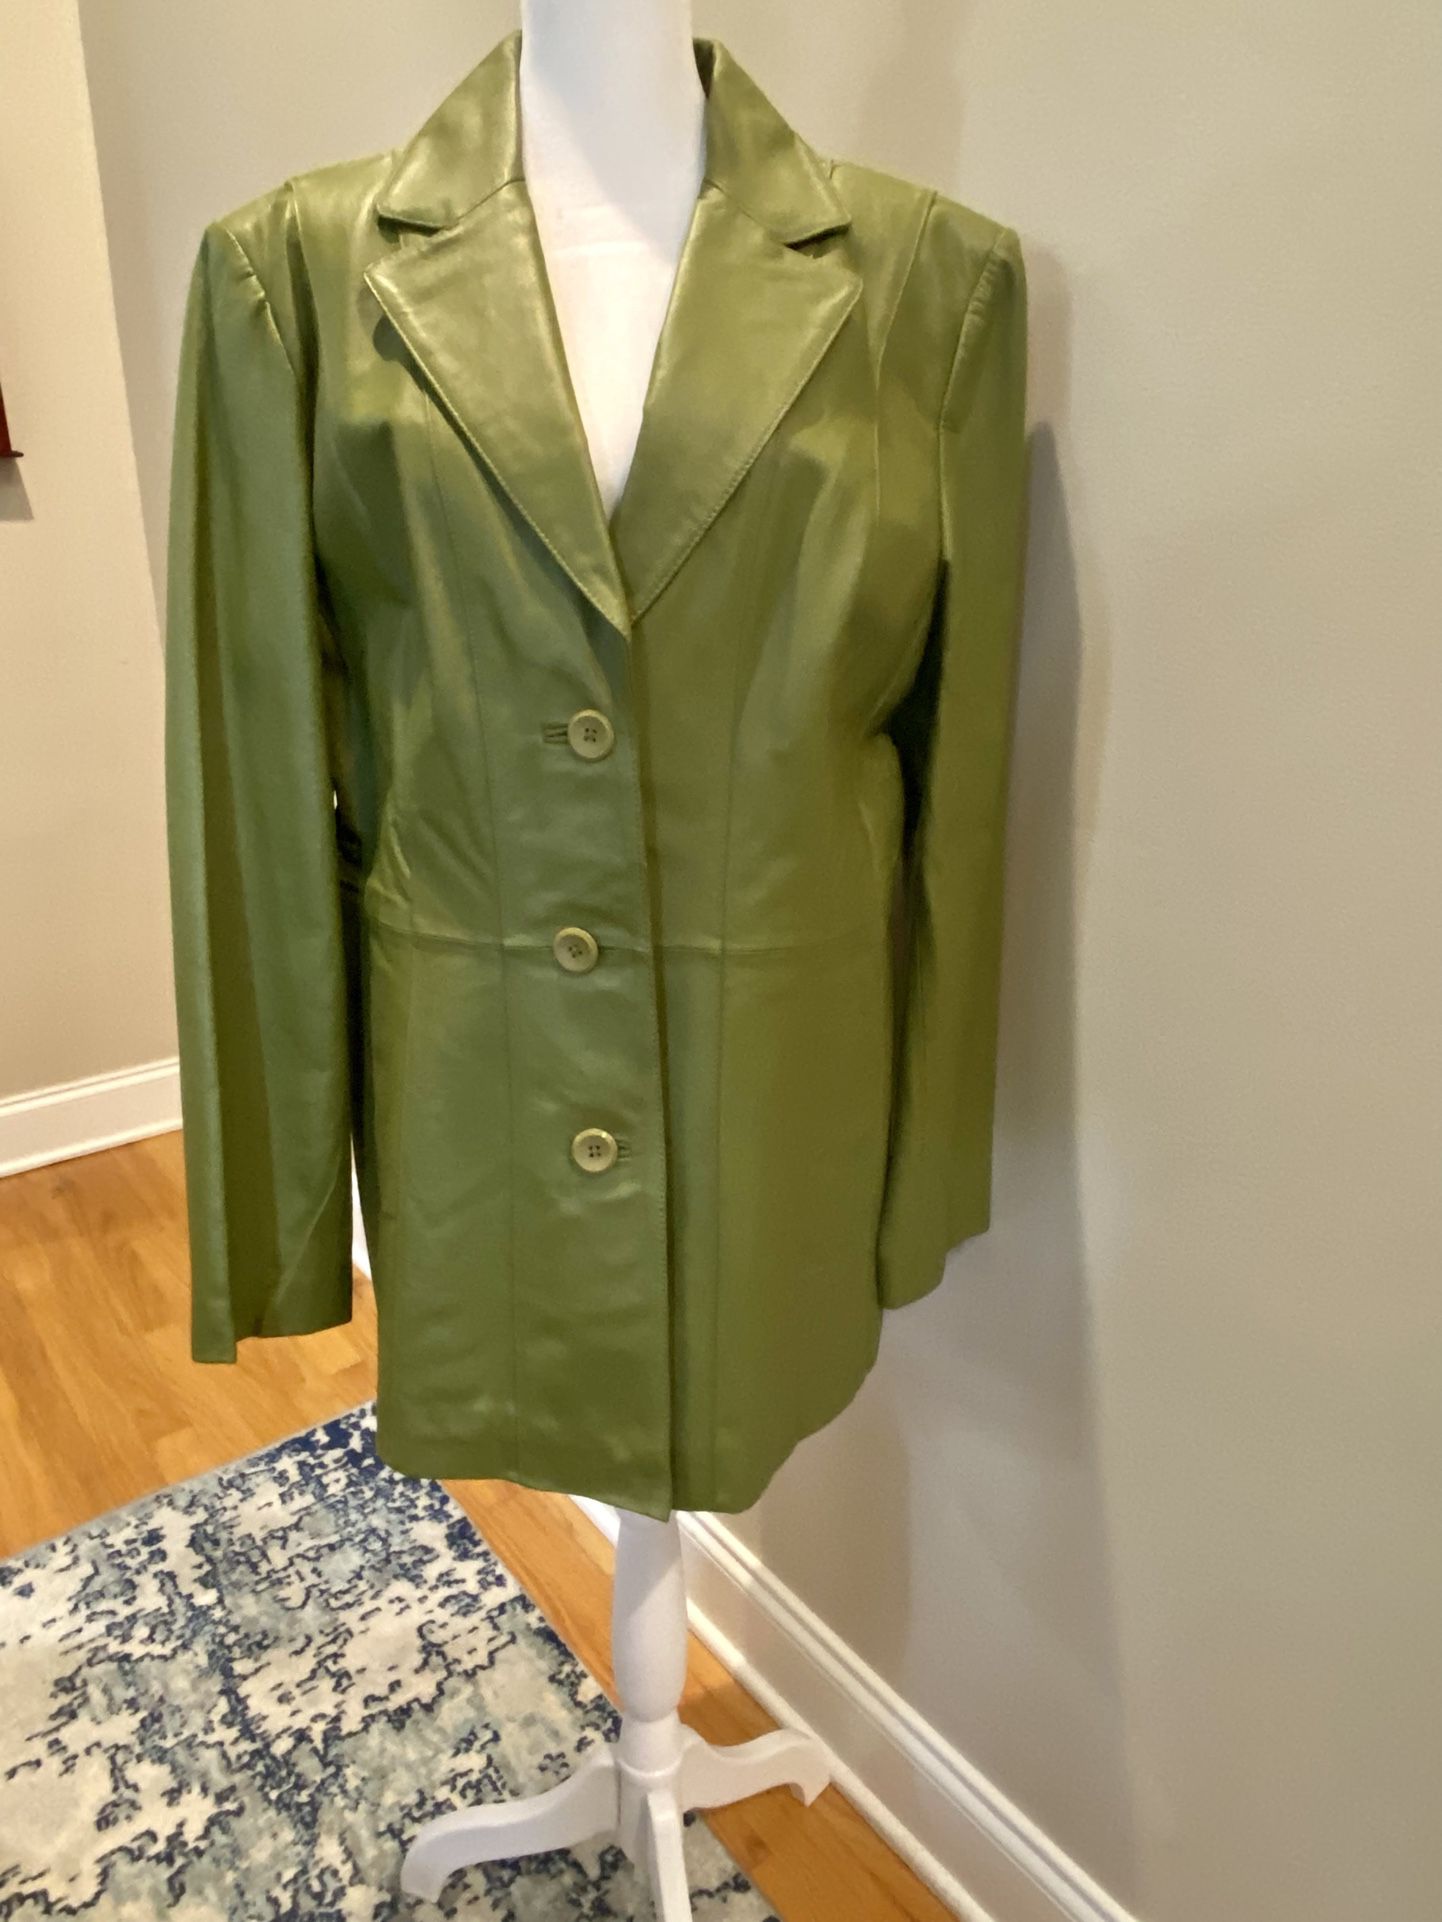 Woman Leather Green Jacket Like New. Size Large